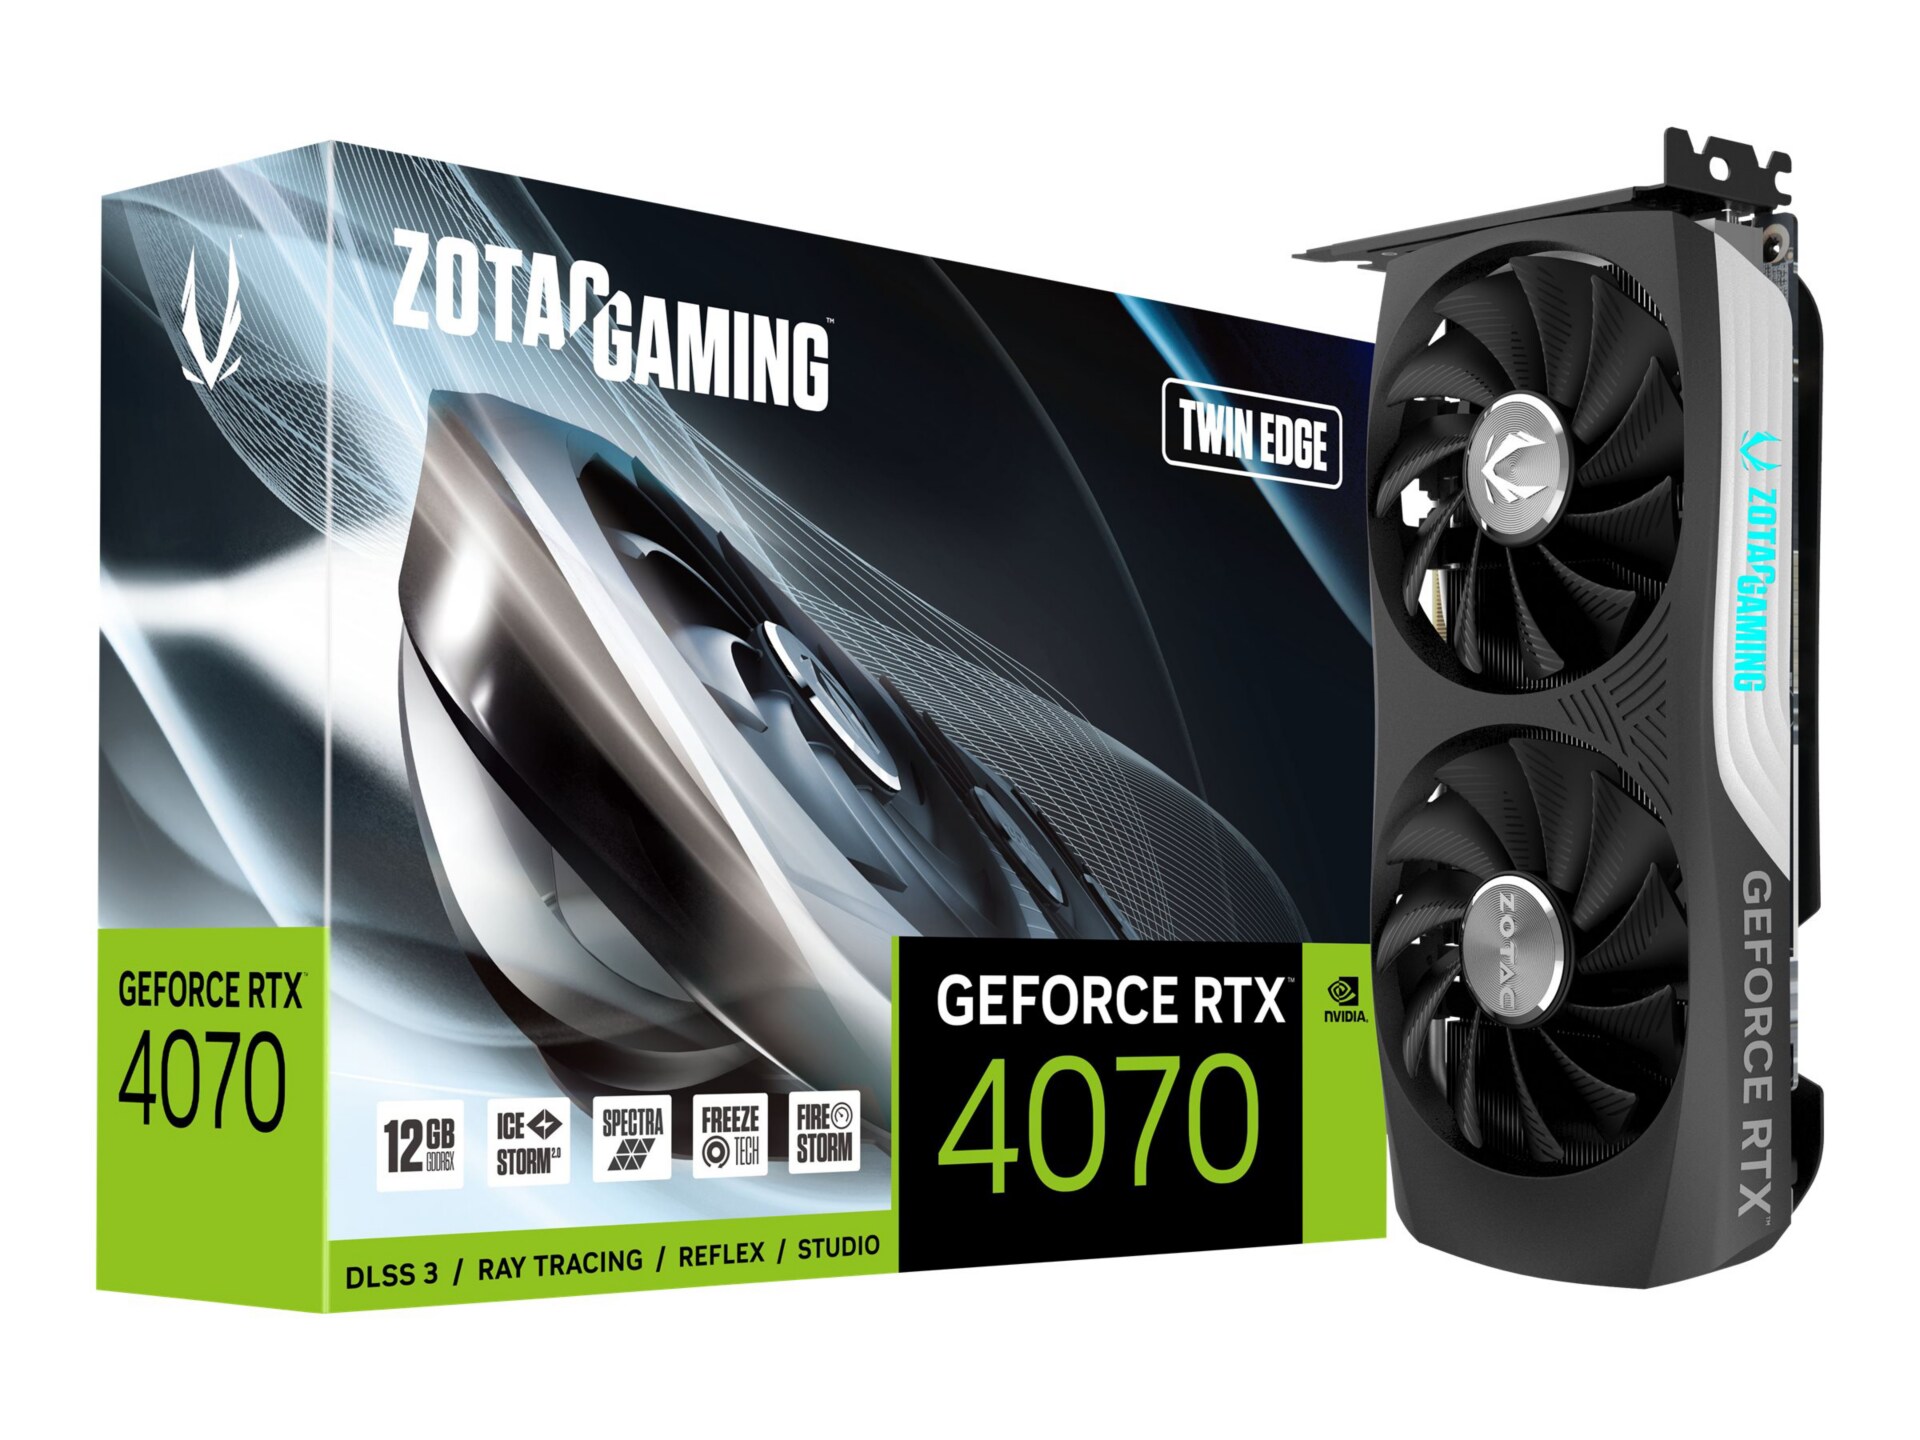 ZOTAC GAMING GeForce RTX 4070 Twin Edge - graphics card - GeForce RTX 4070